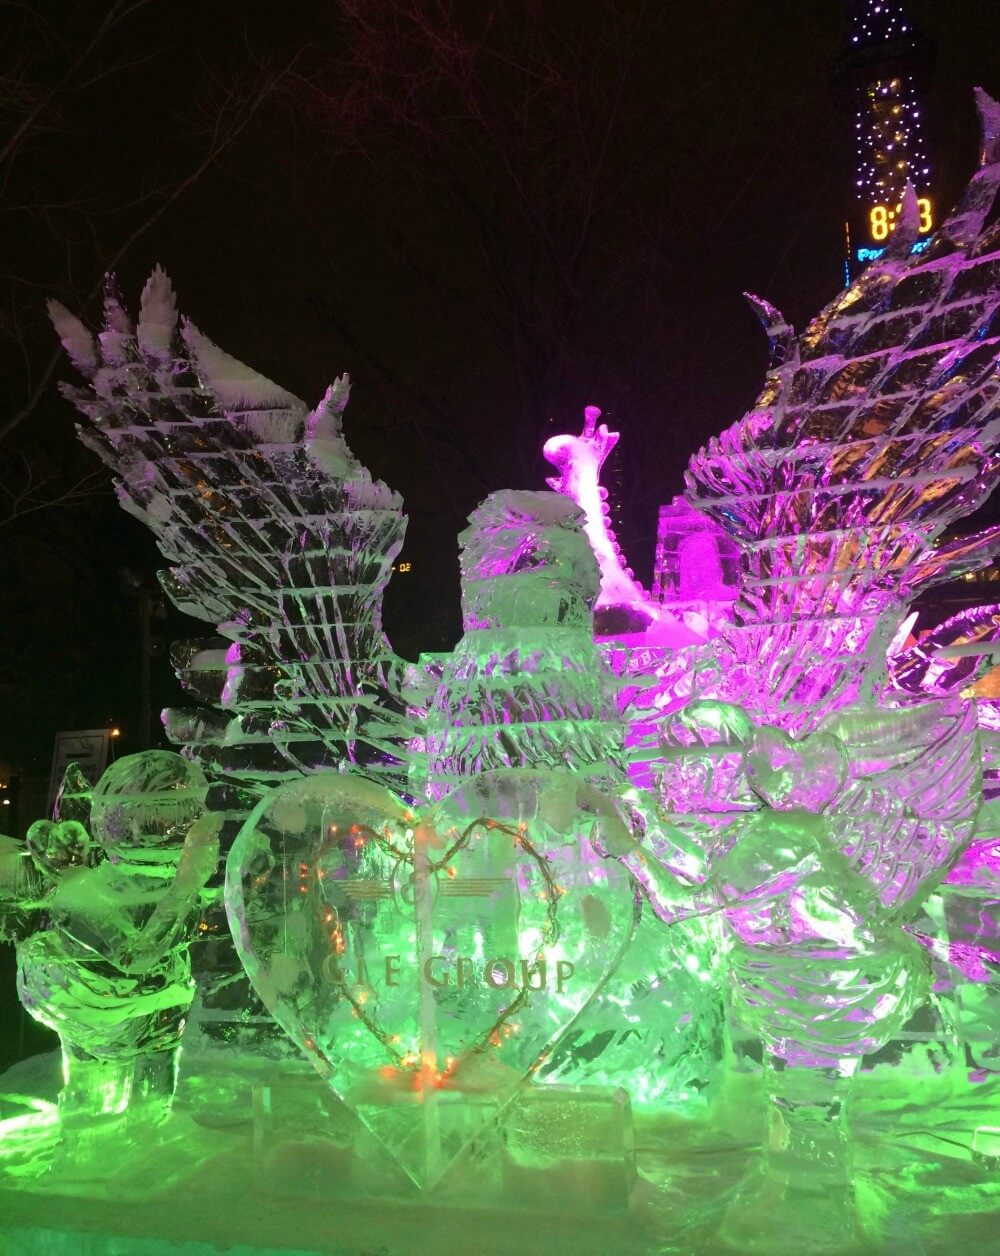 Photos of the Sapporo Ice Festival